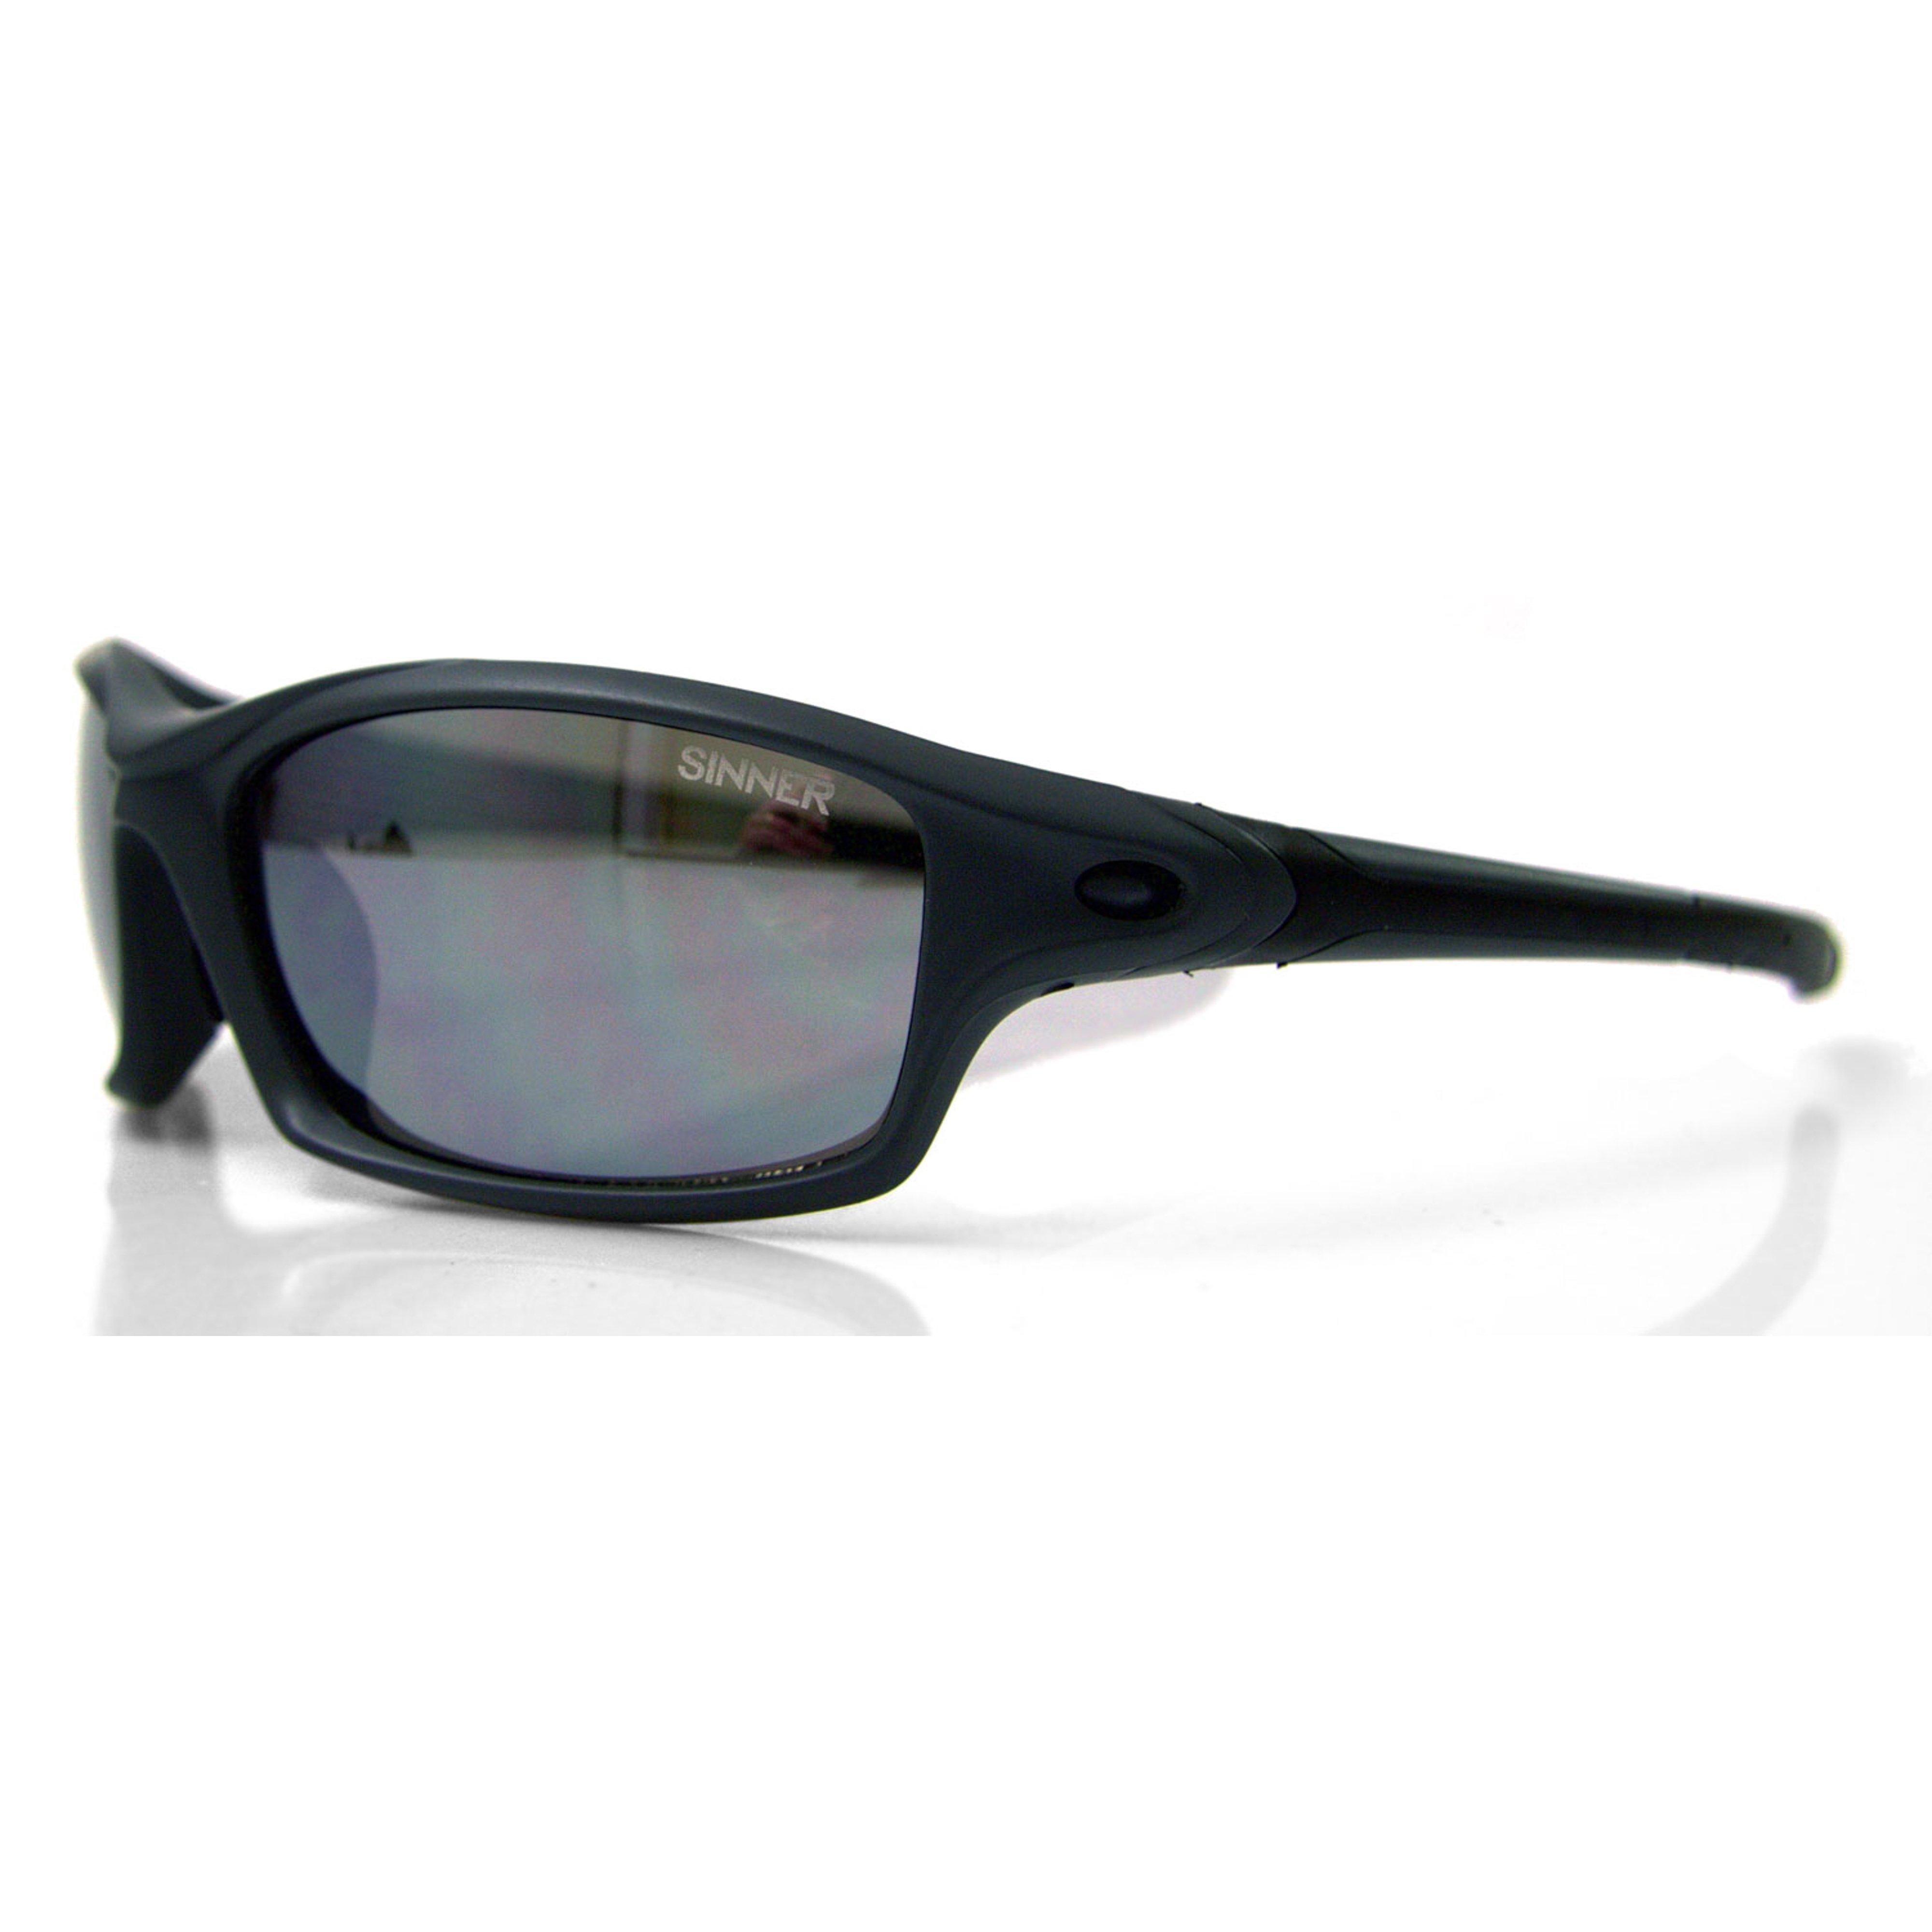 Sinner Eaton Sunglasses (Matte Grey / Smoke / Mirror) Review